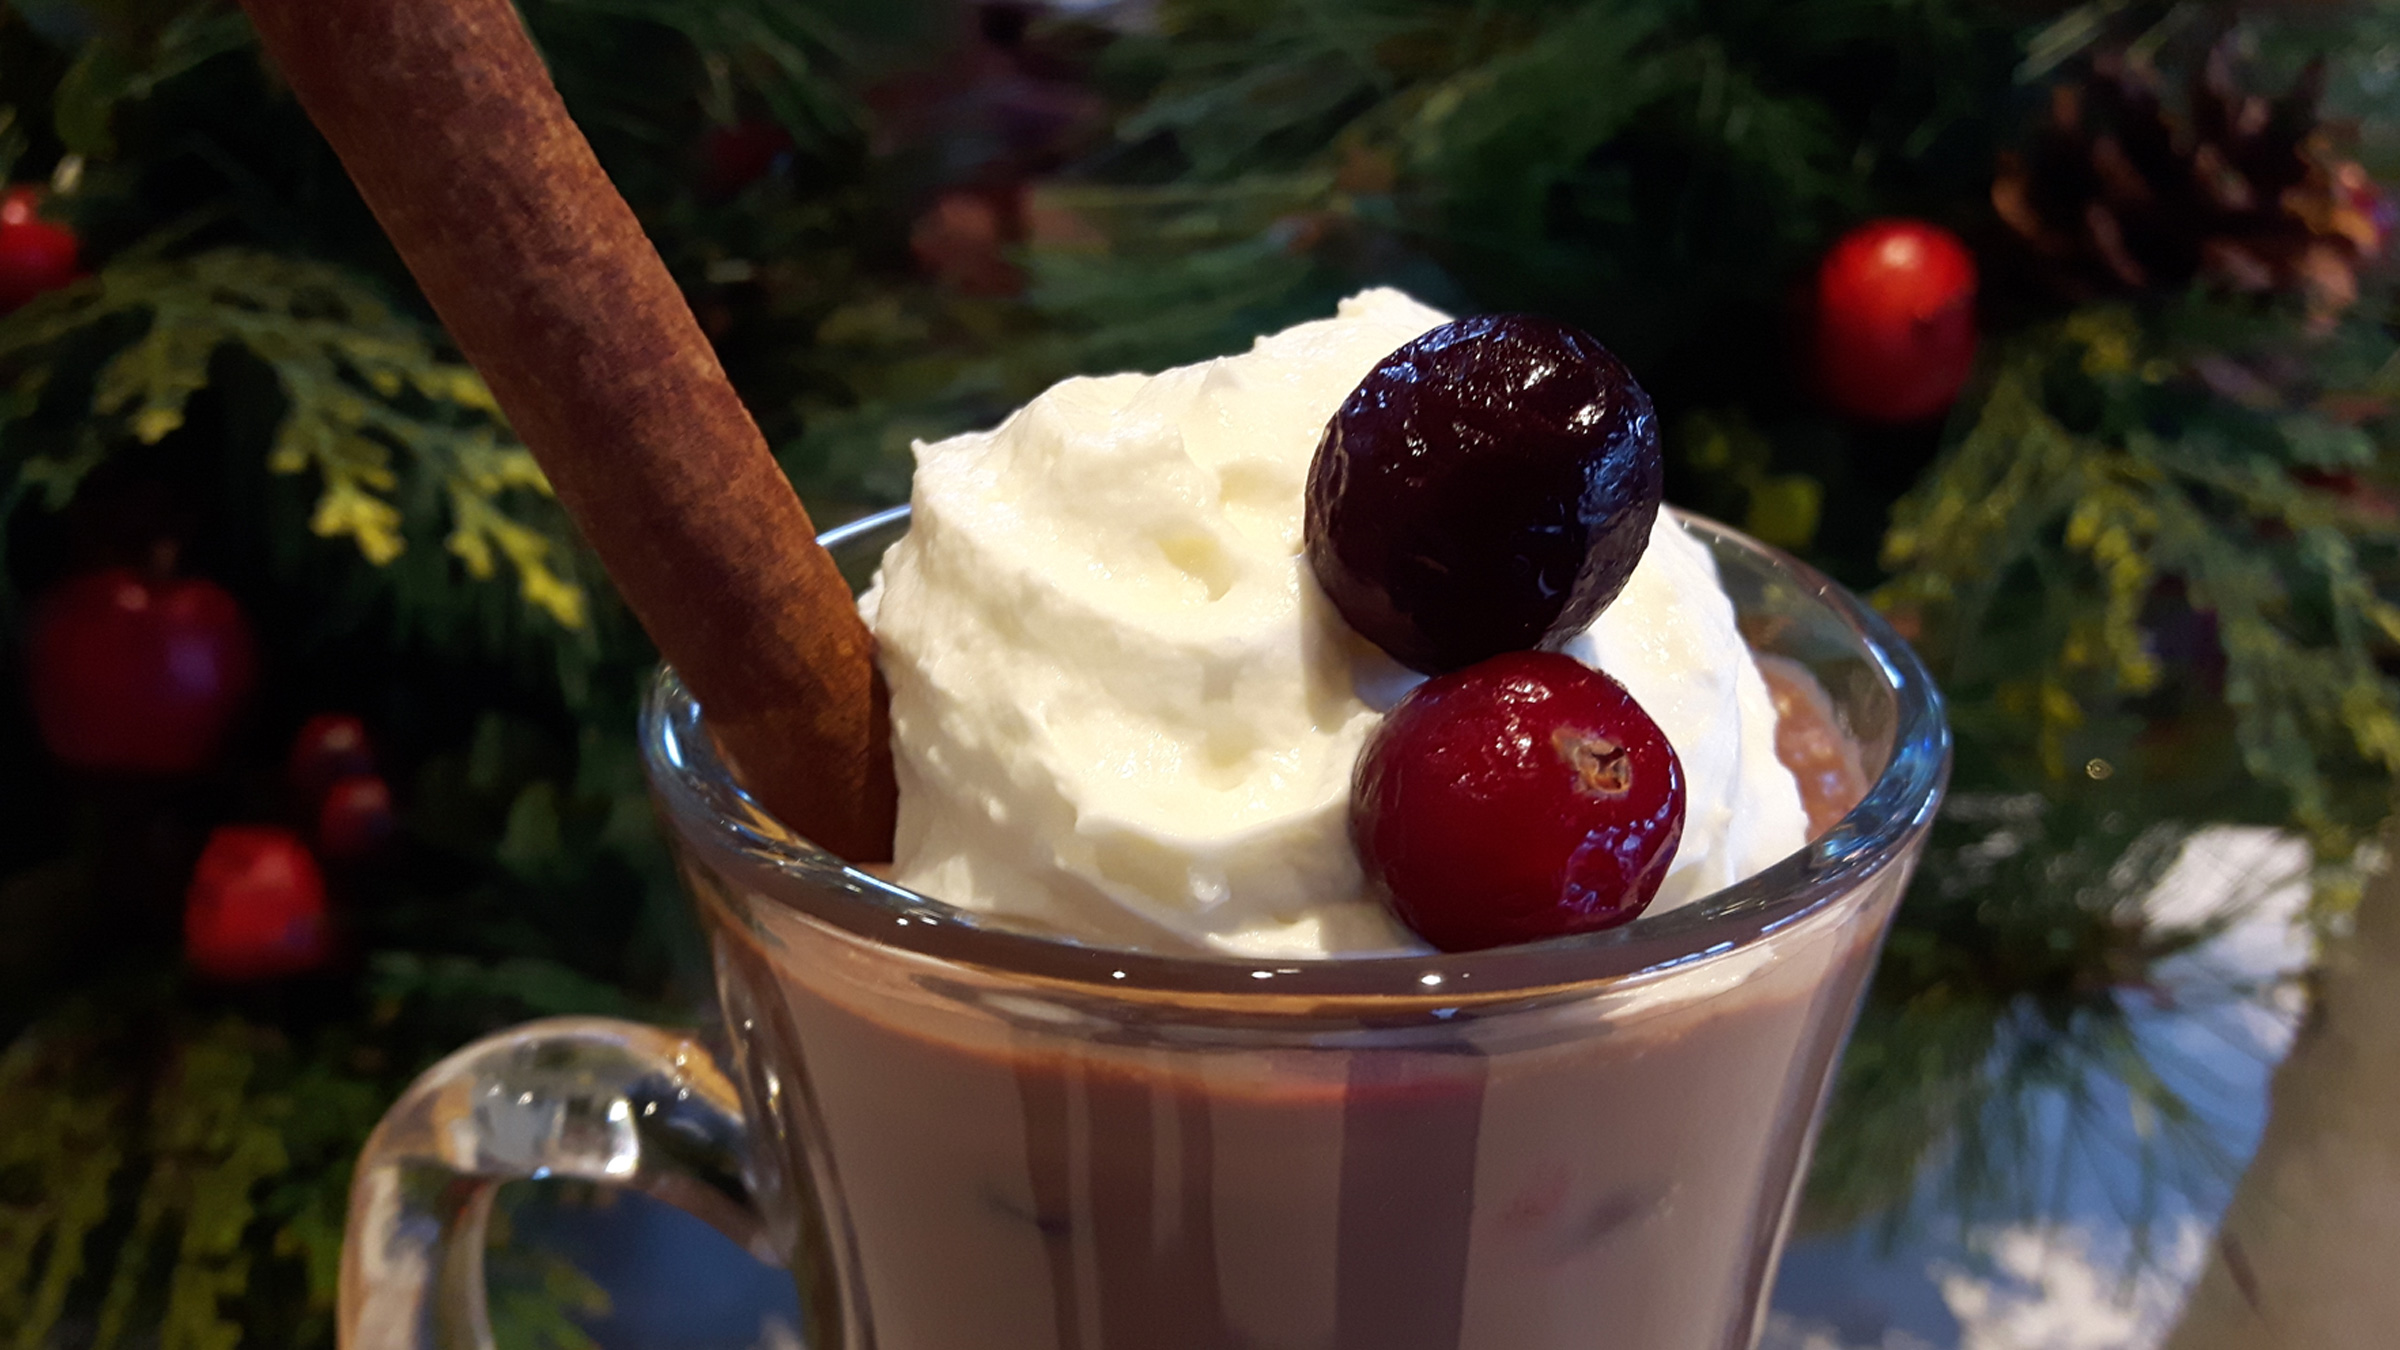 Blog: Red Wine Hot Chocolate with a Muskoka Twist